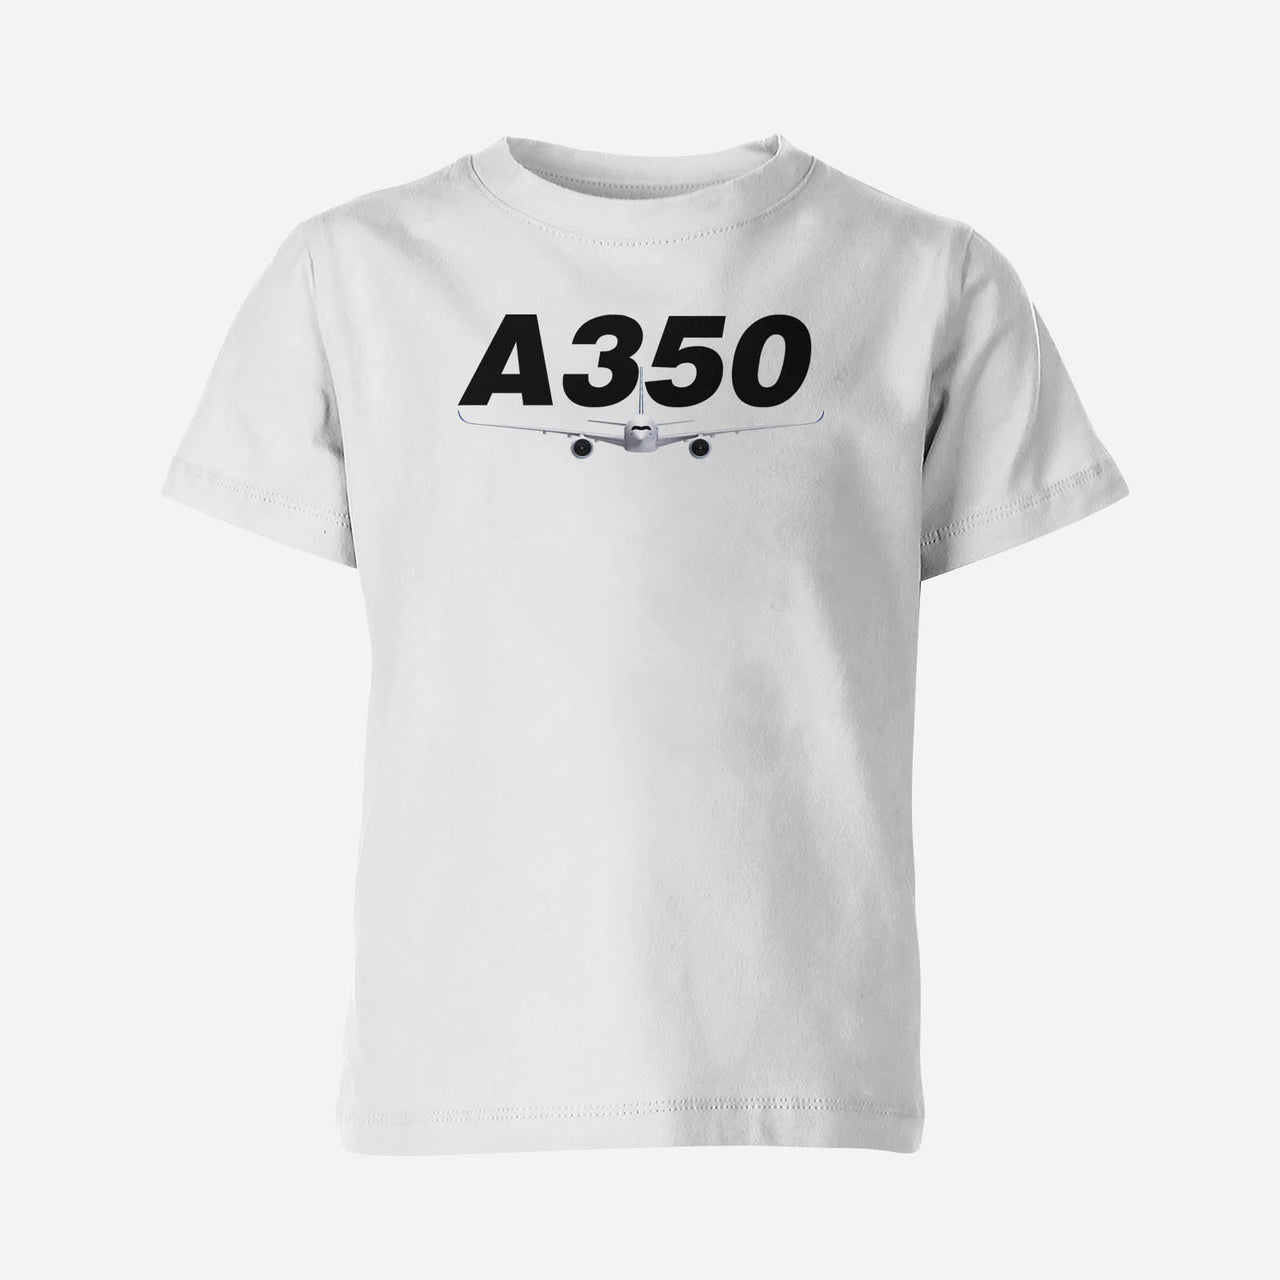 Super Airbus A350 Designed Children T-Shirts